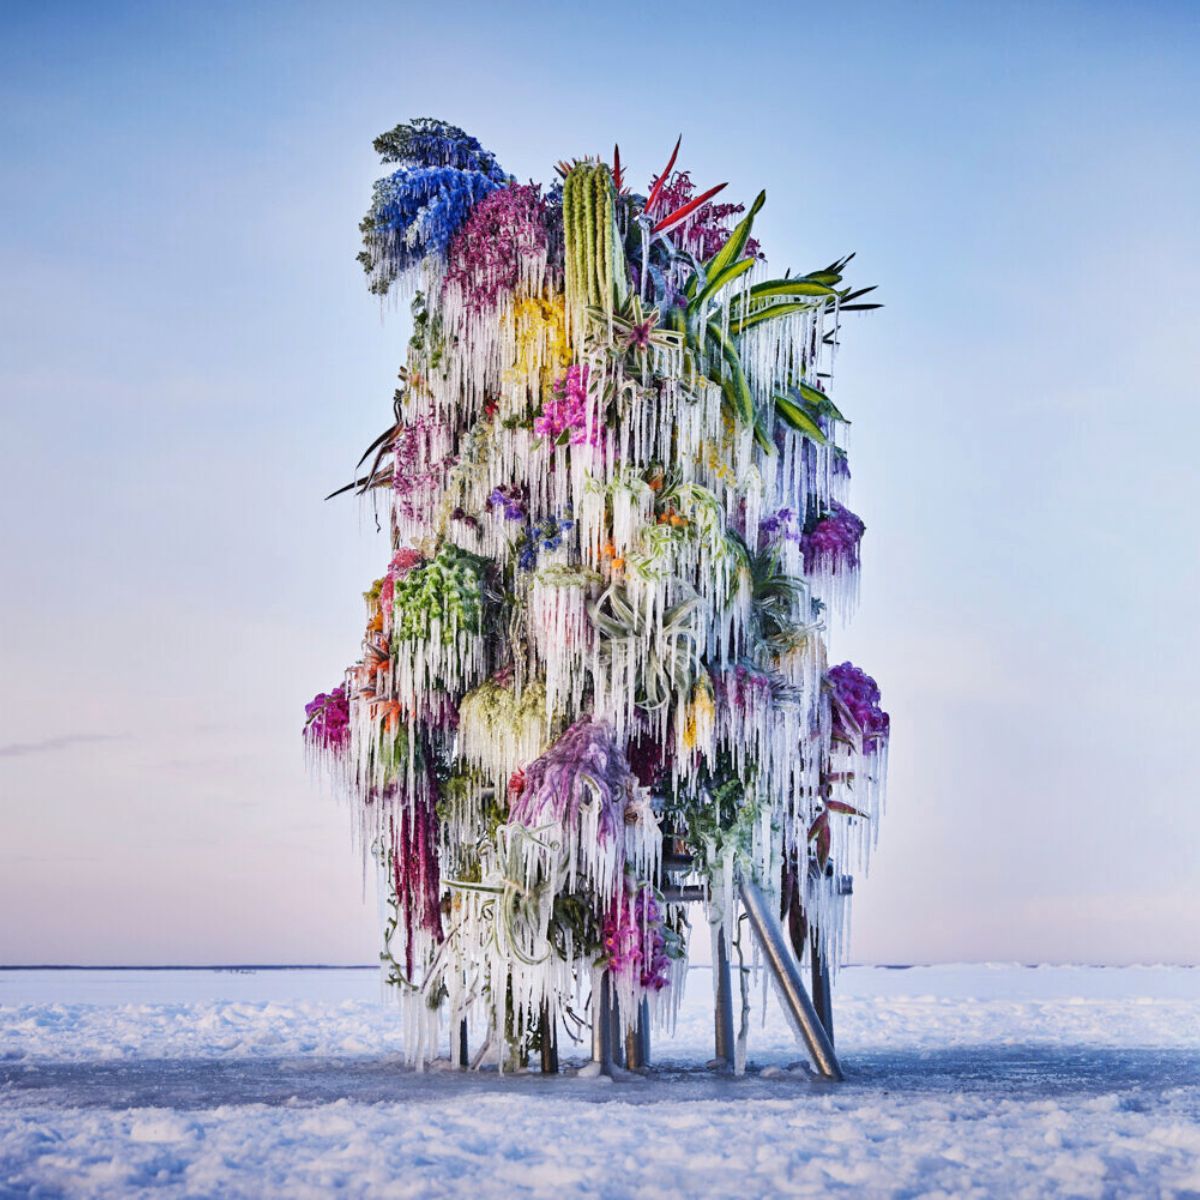 sculptures-by-azuma-makoto-freeze-hundreds-of-flowers-featured